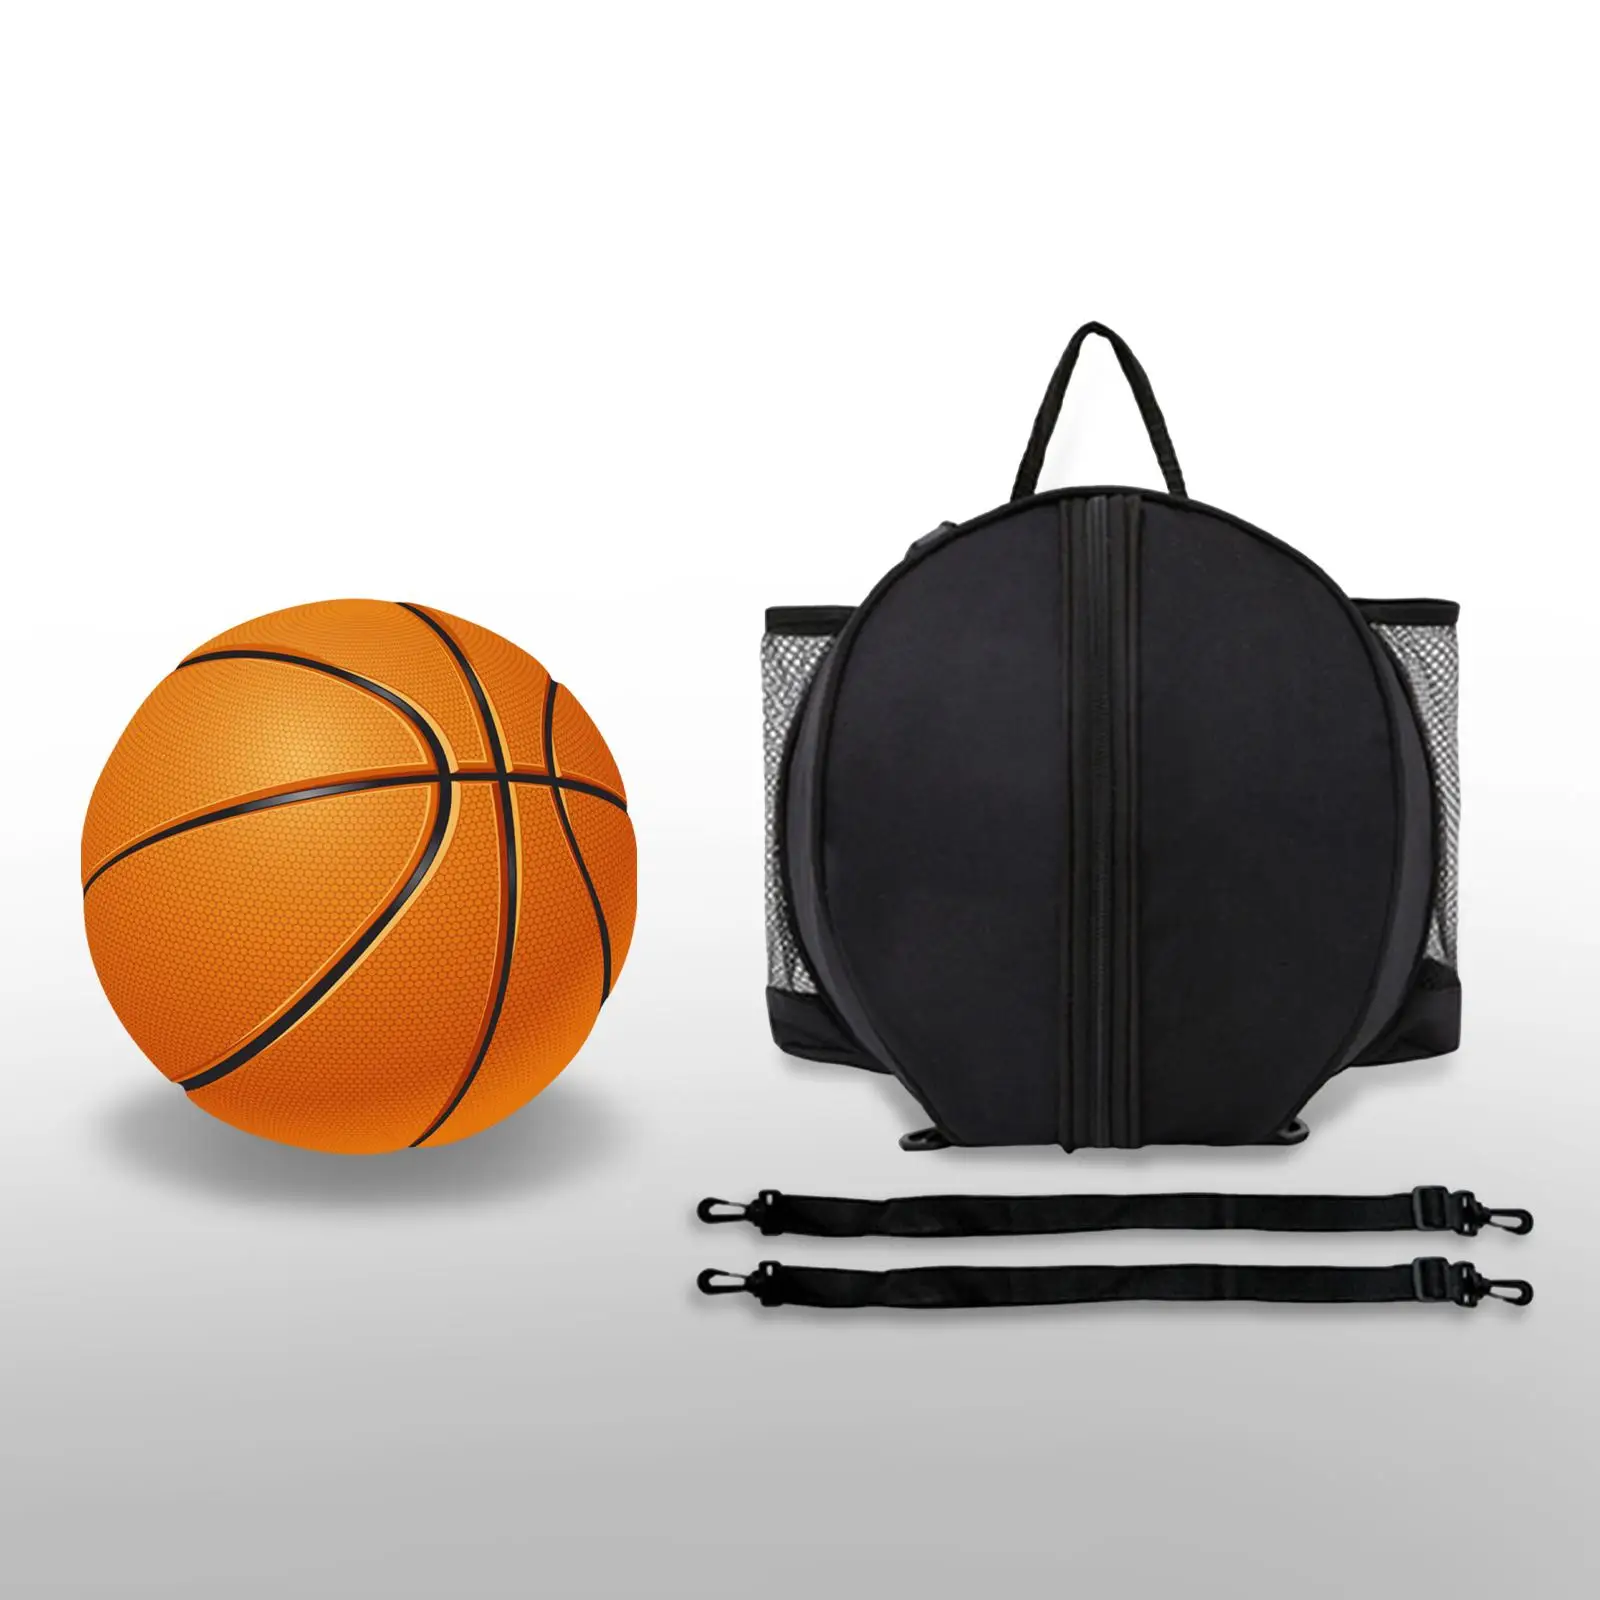 Basketball Shoulder Bag Football Bag Sports Ball Bag Accessories Waterproof Storing Clothes or Sports Shoes Adjustable Strap